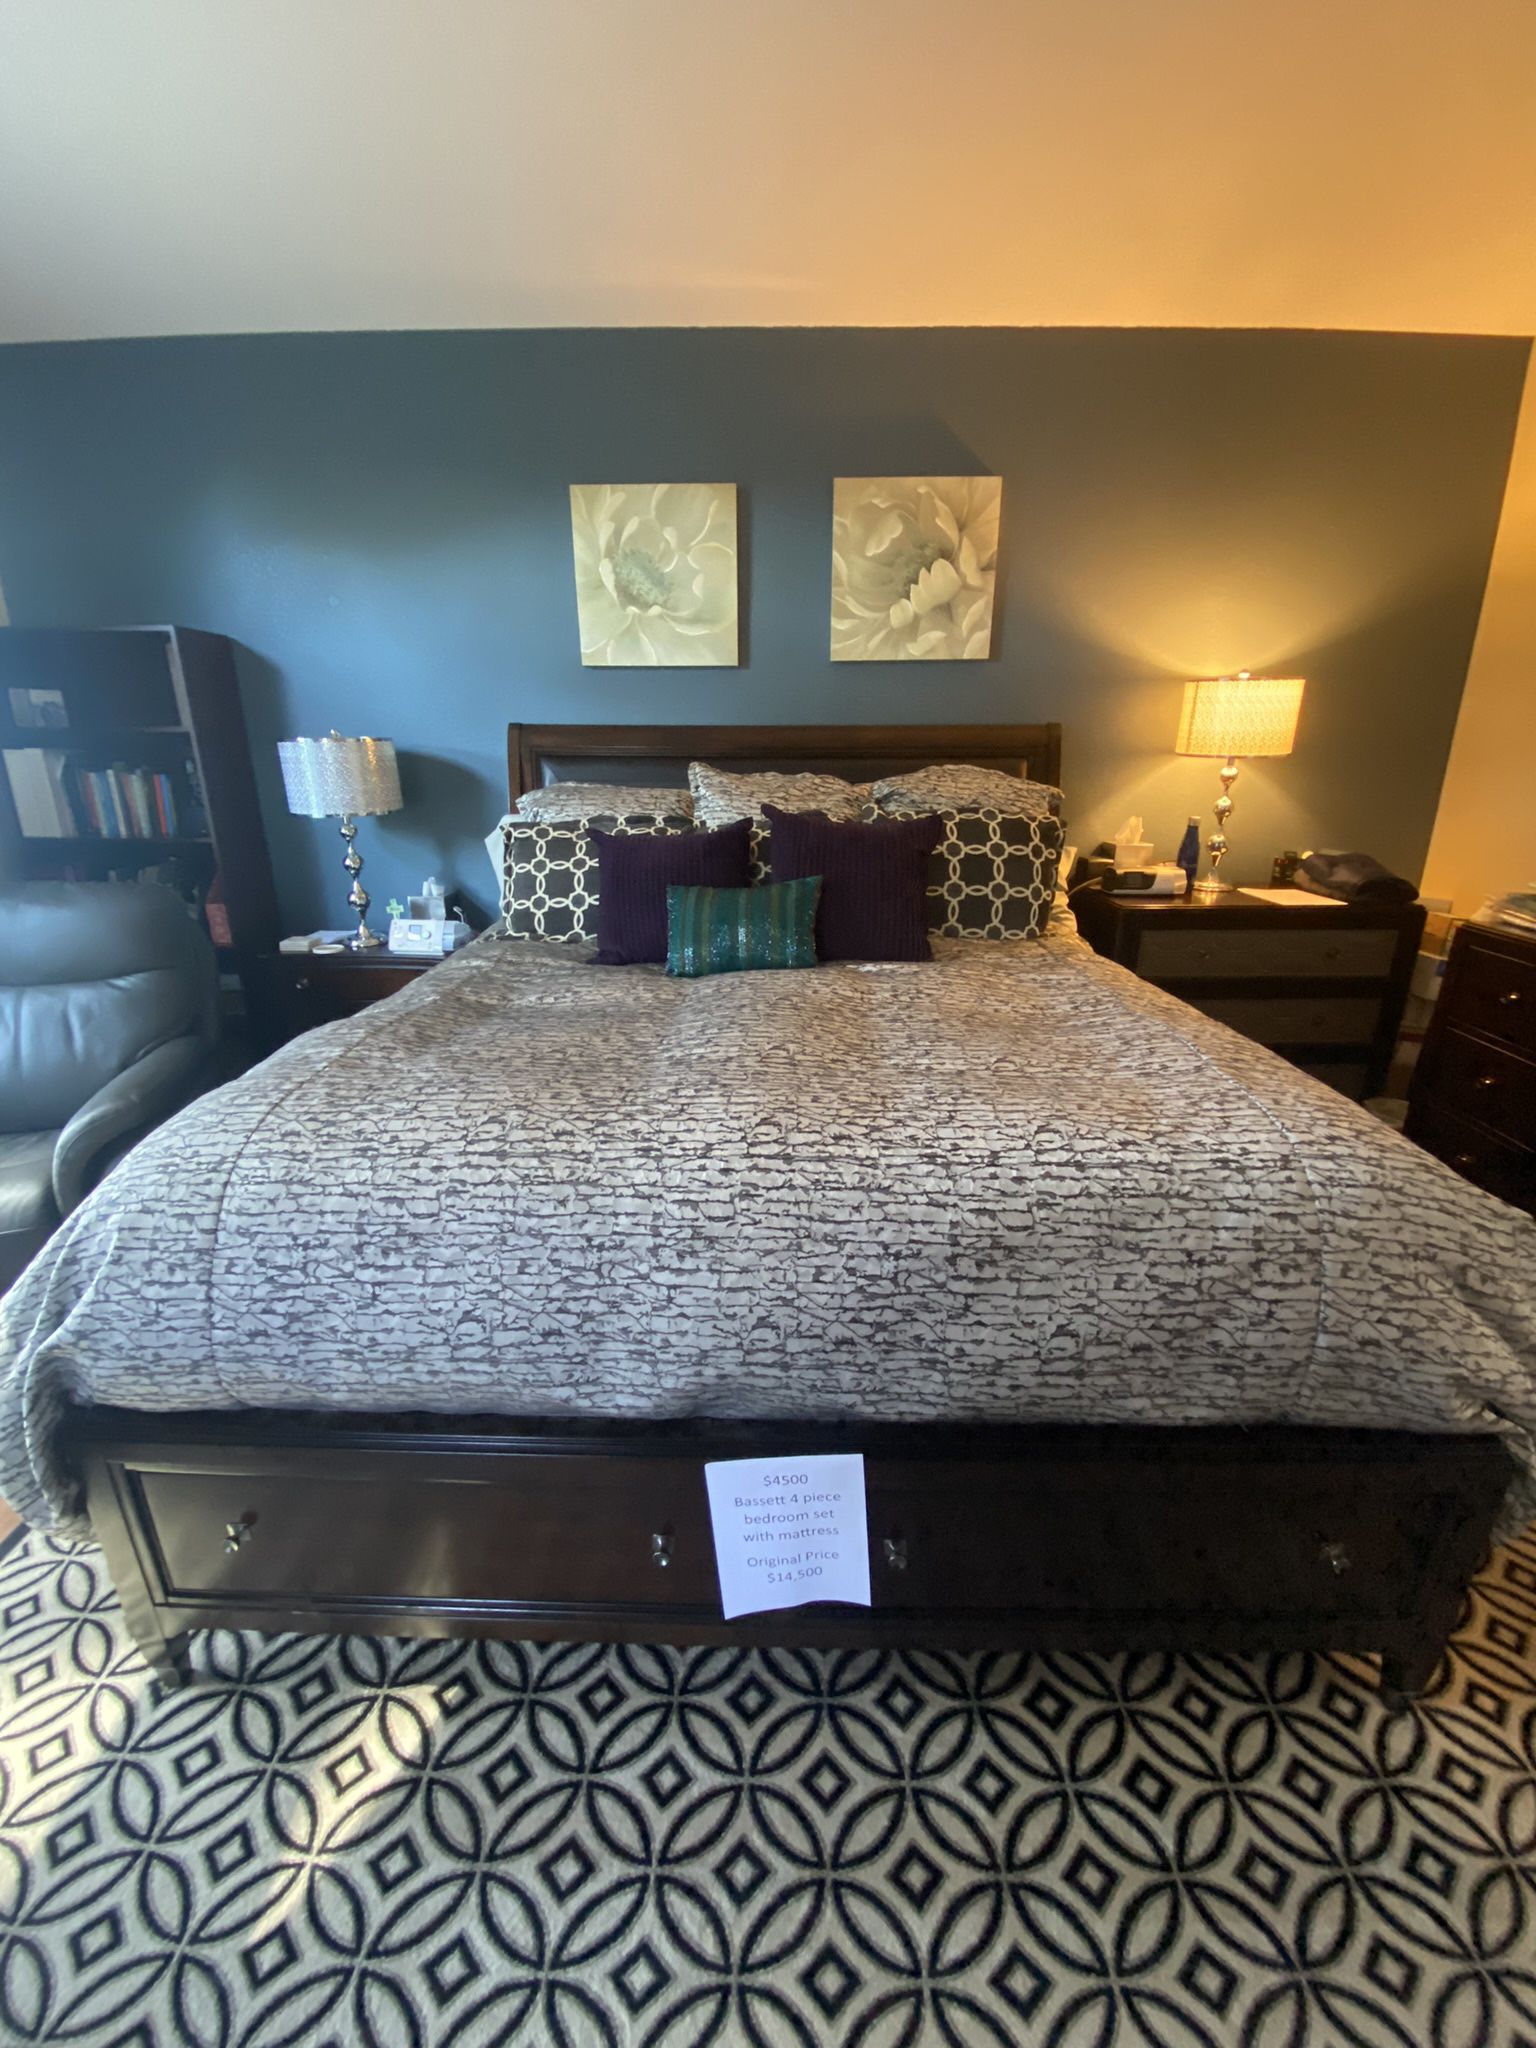 Bassett 4 piece standard king bedroom set mattress is included